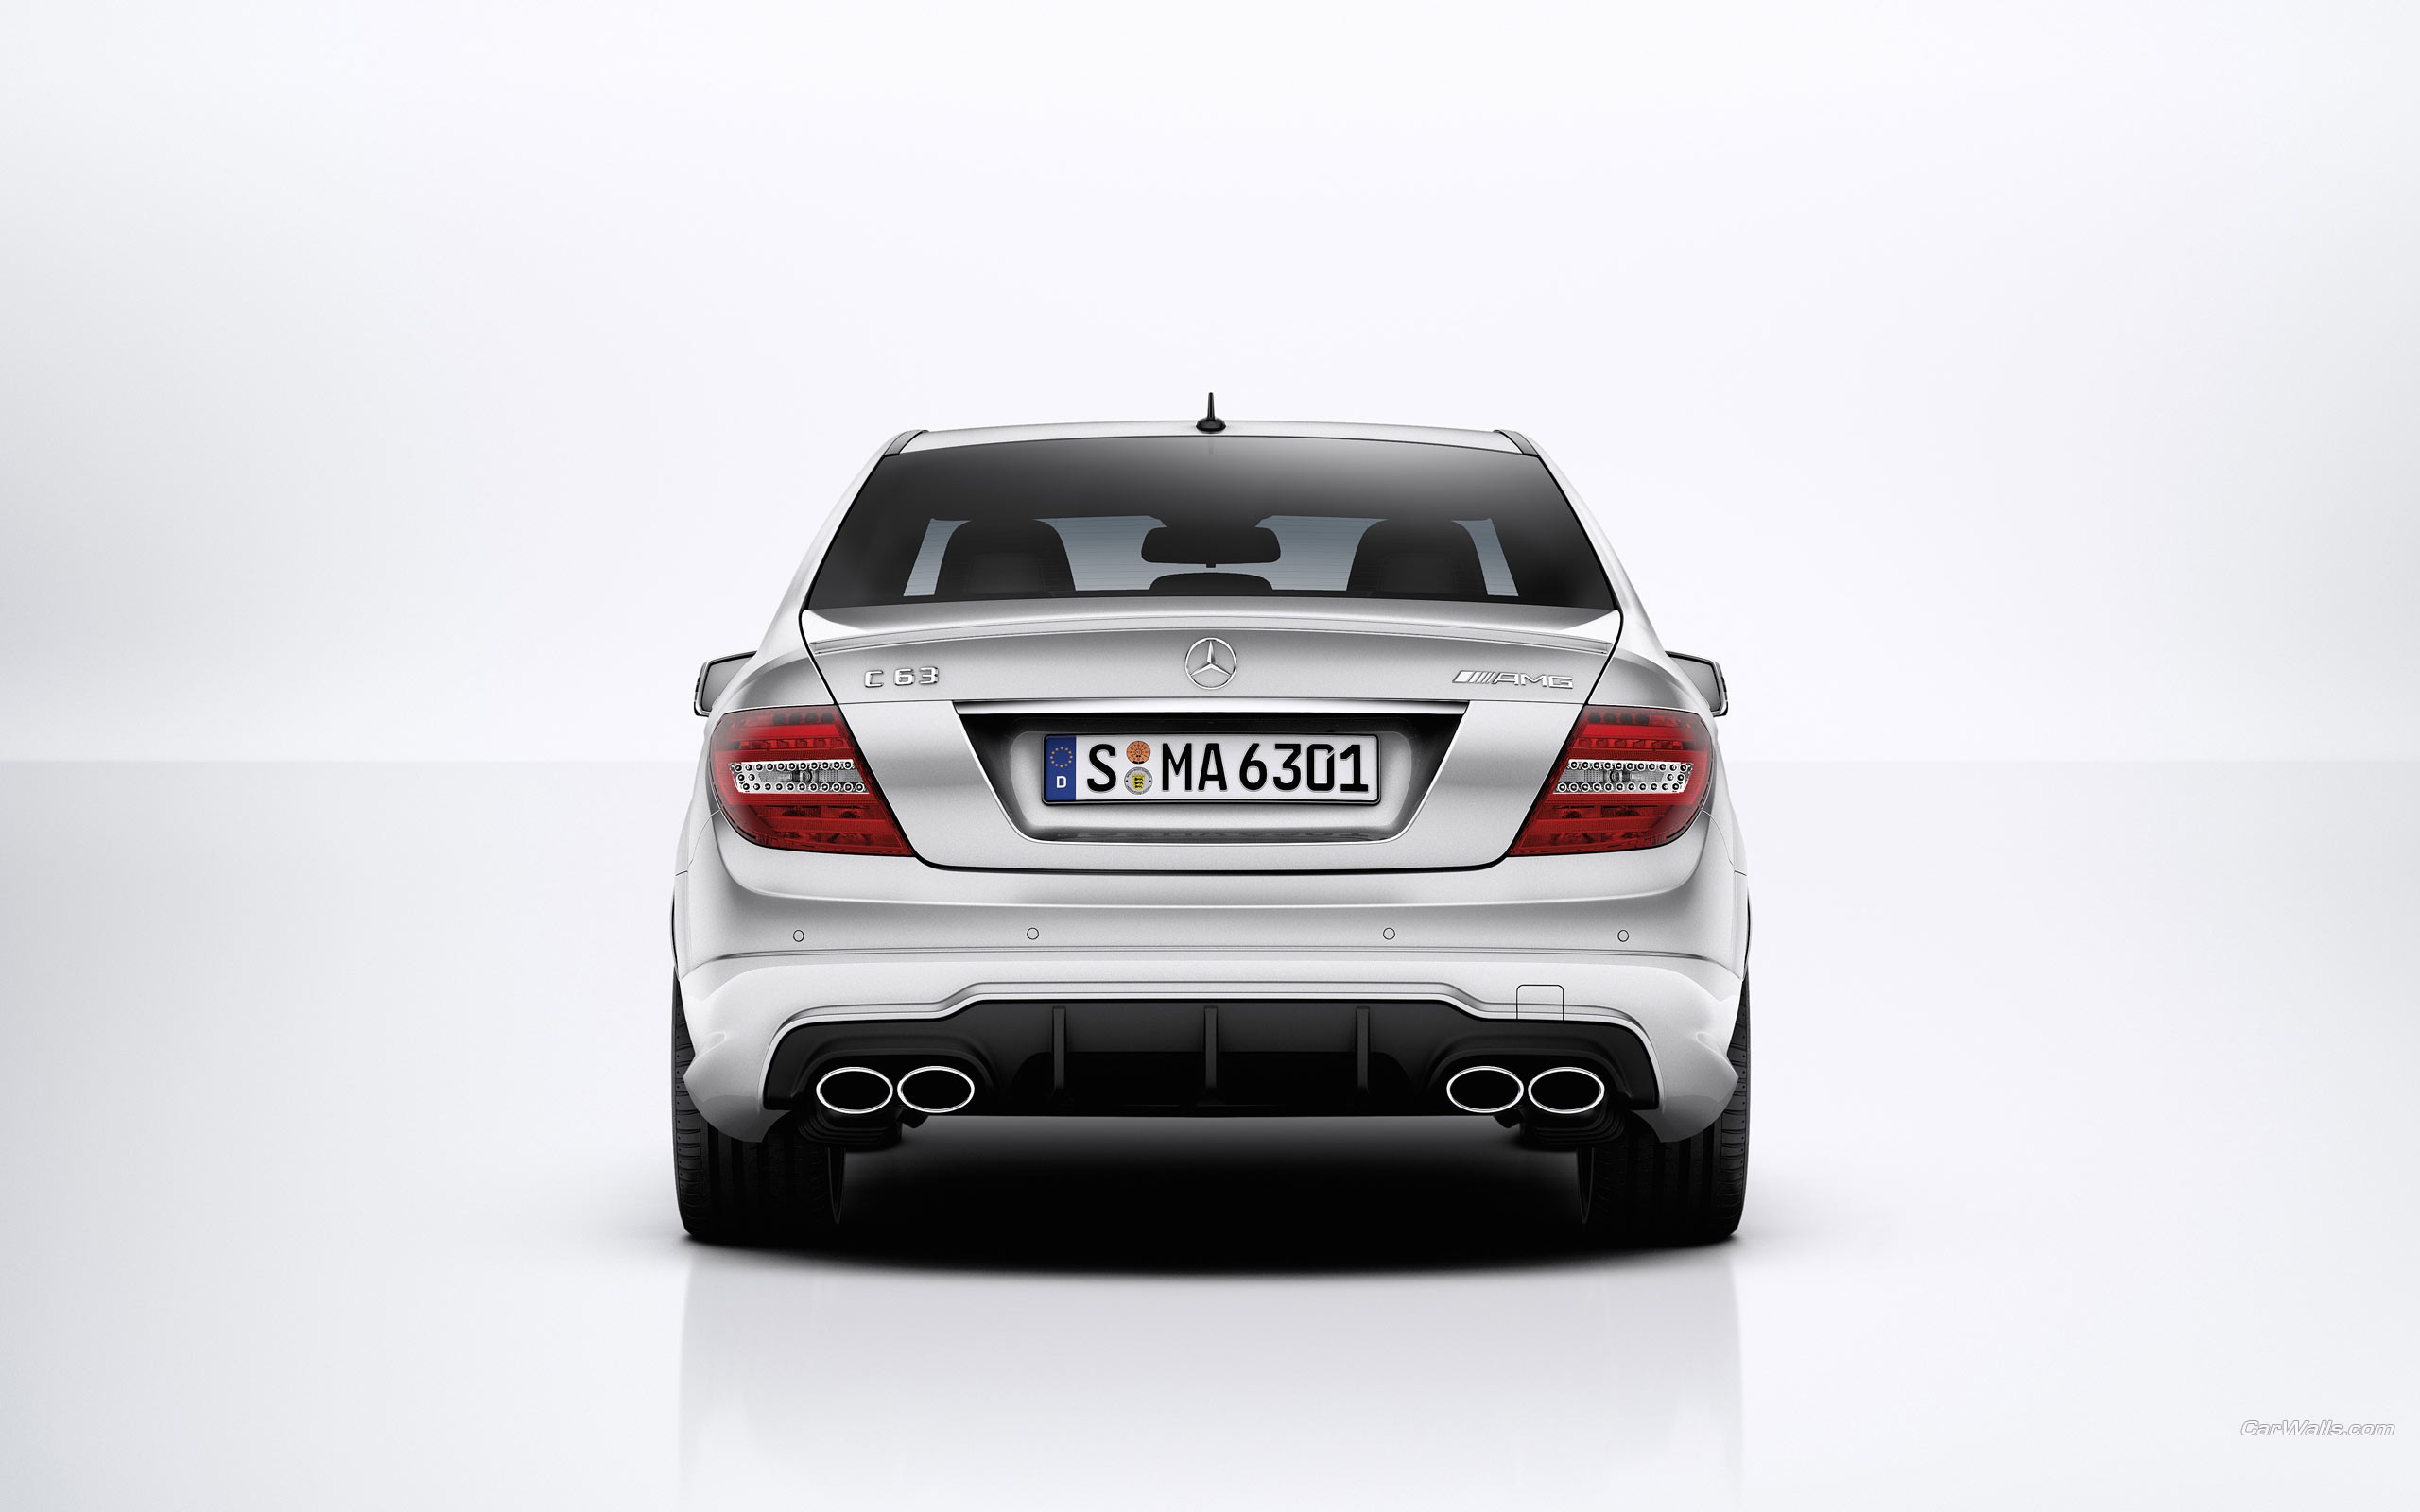 cars, vehicles, Mercedes-Benz - desktop wallpaper